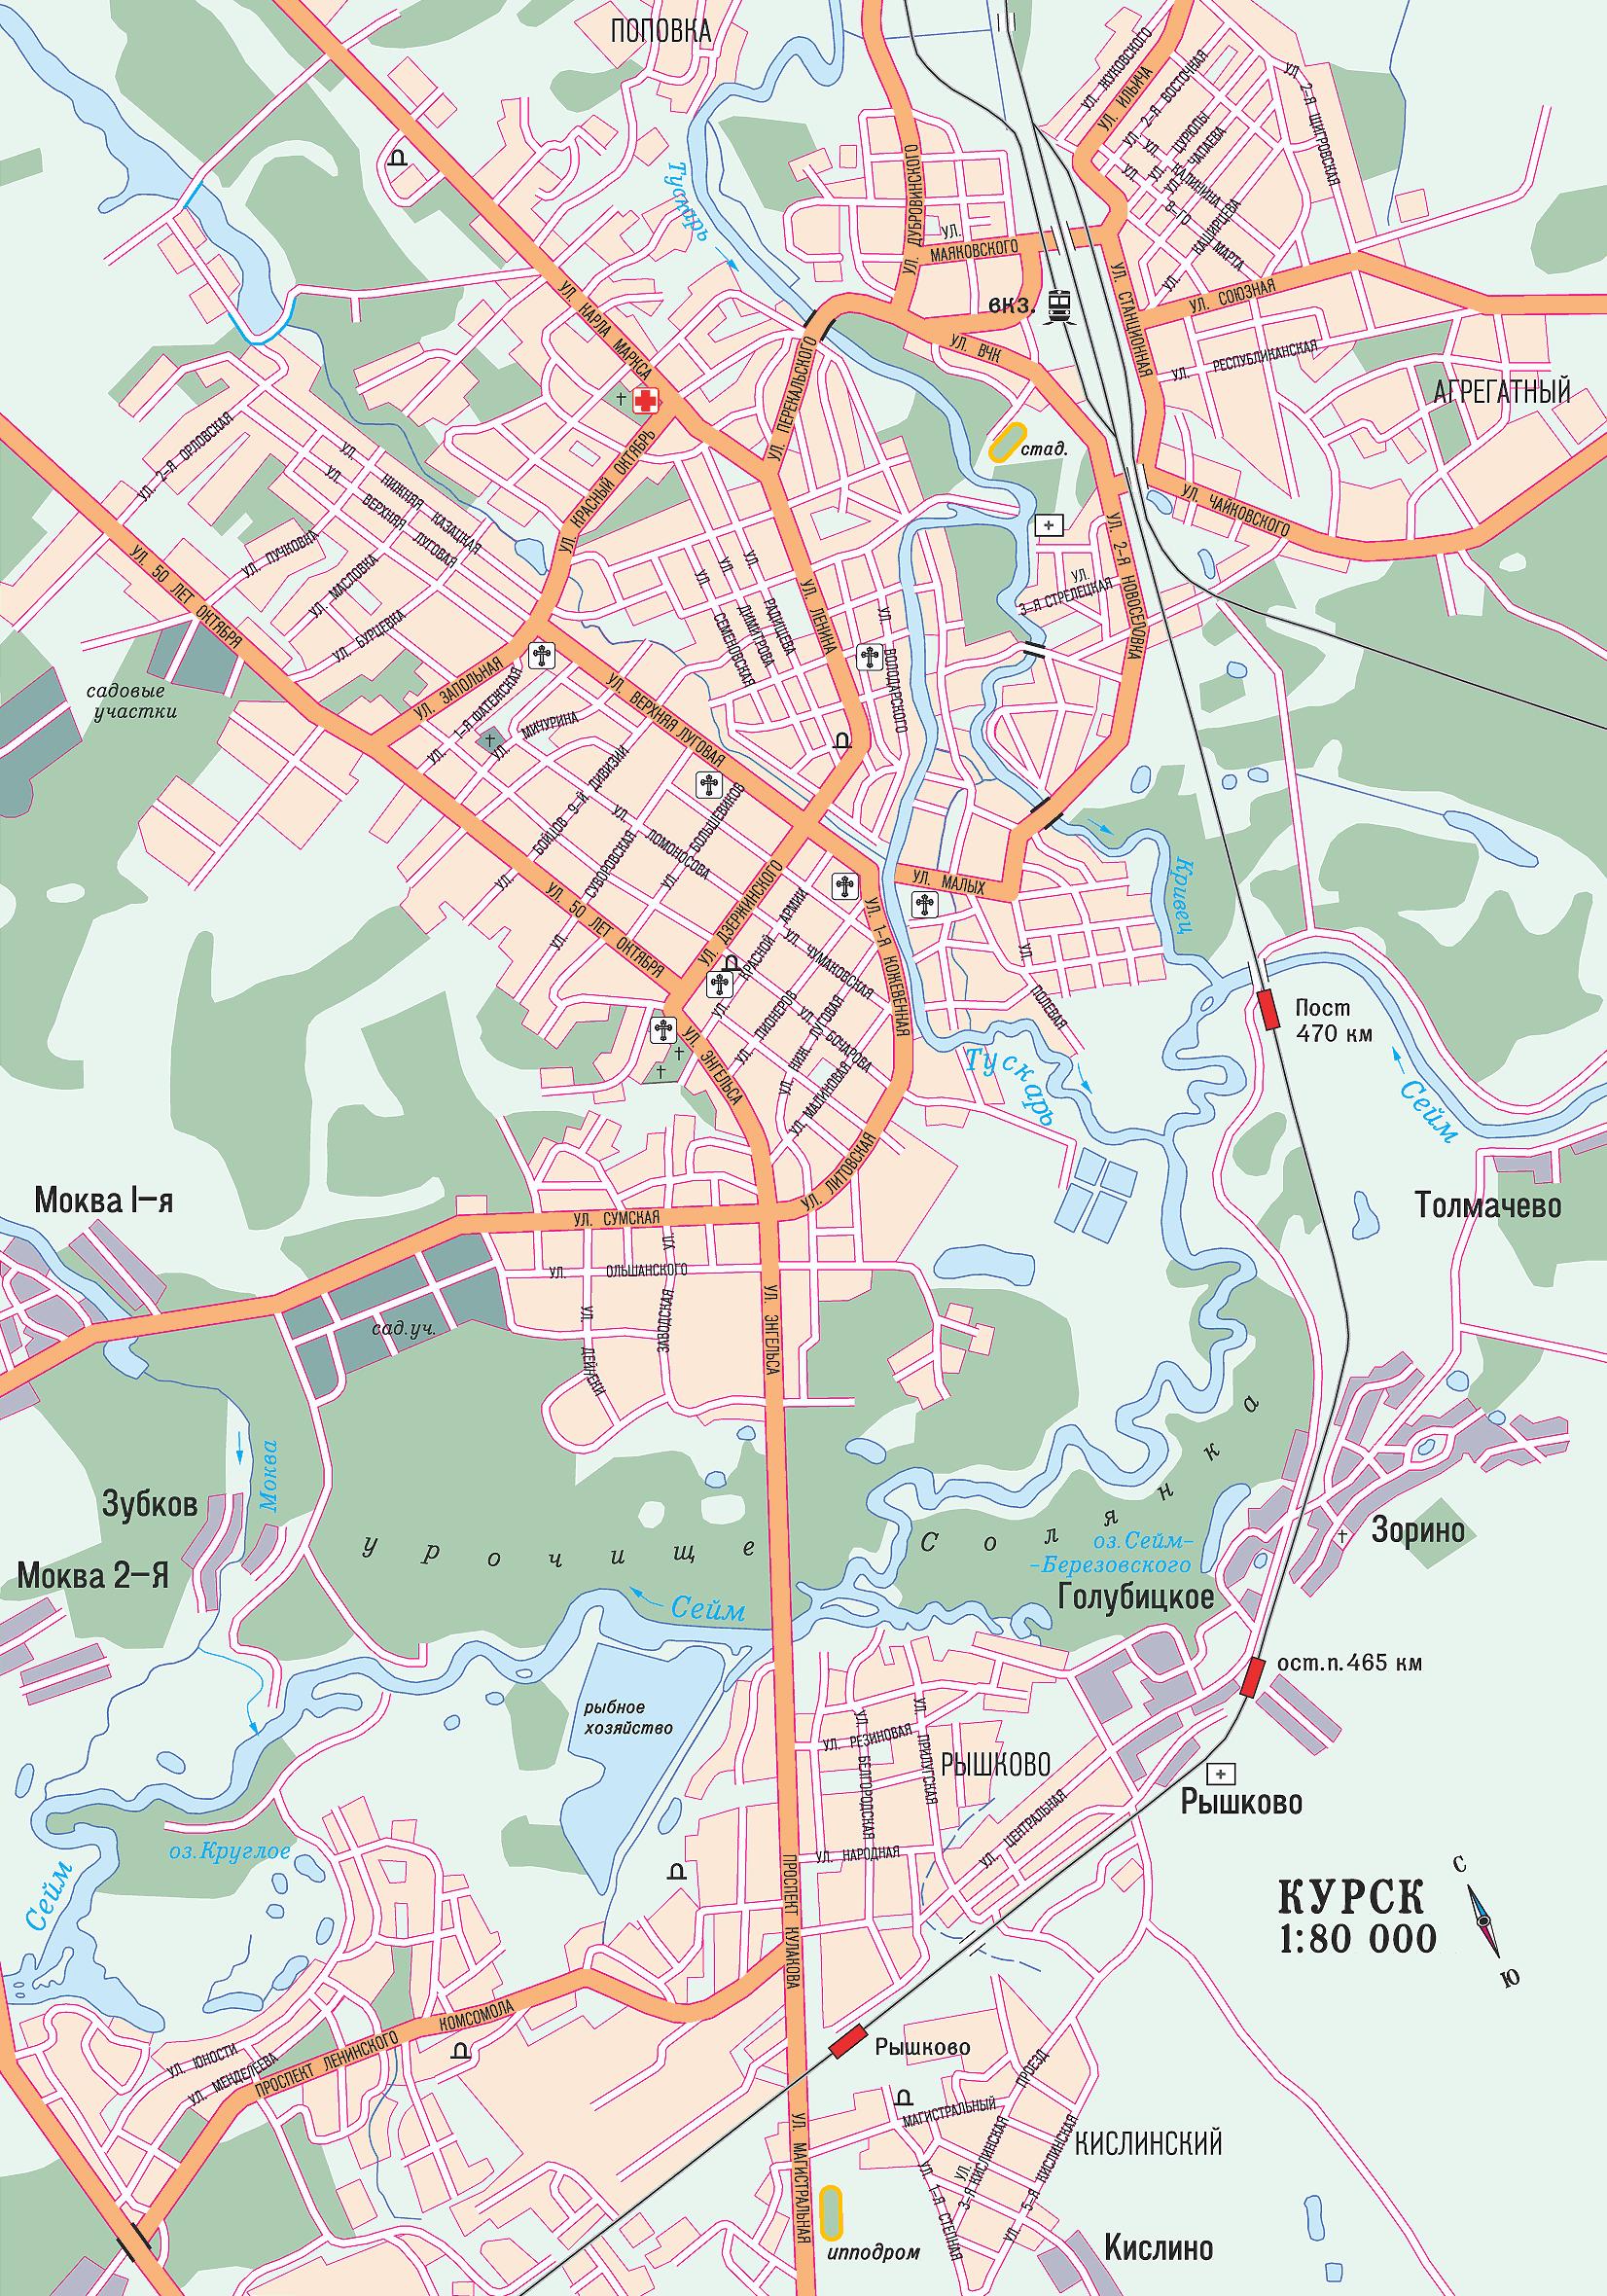 Карта города Курск